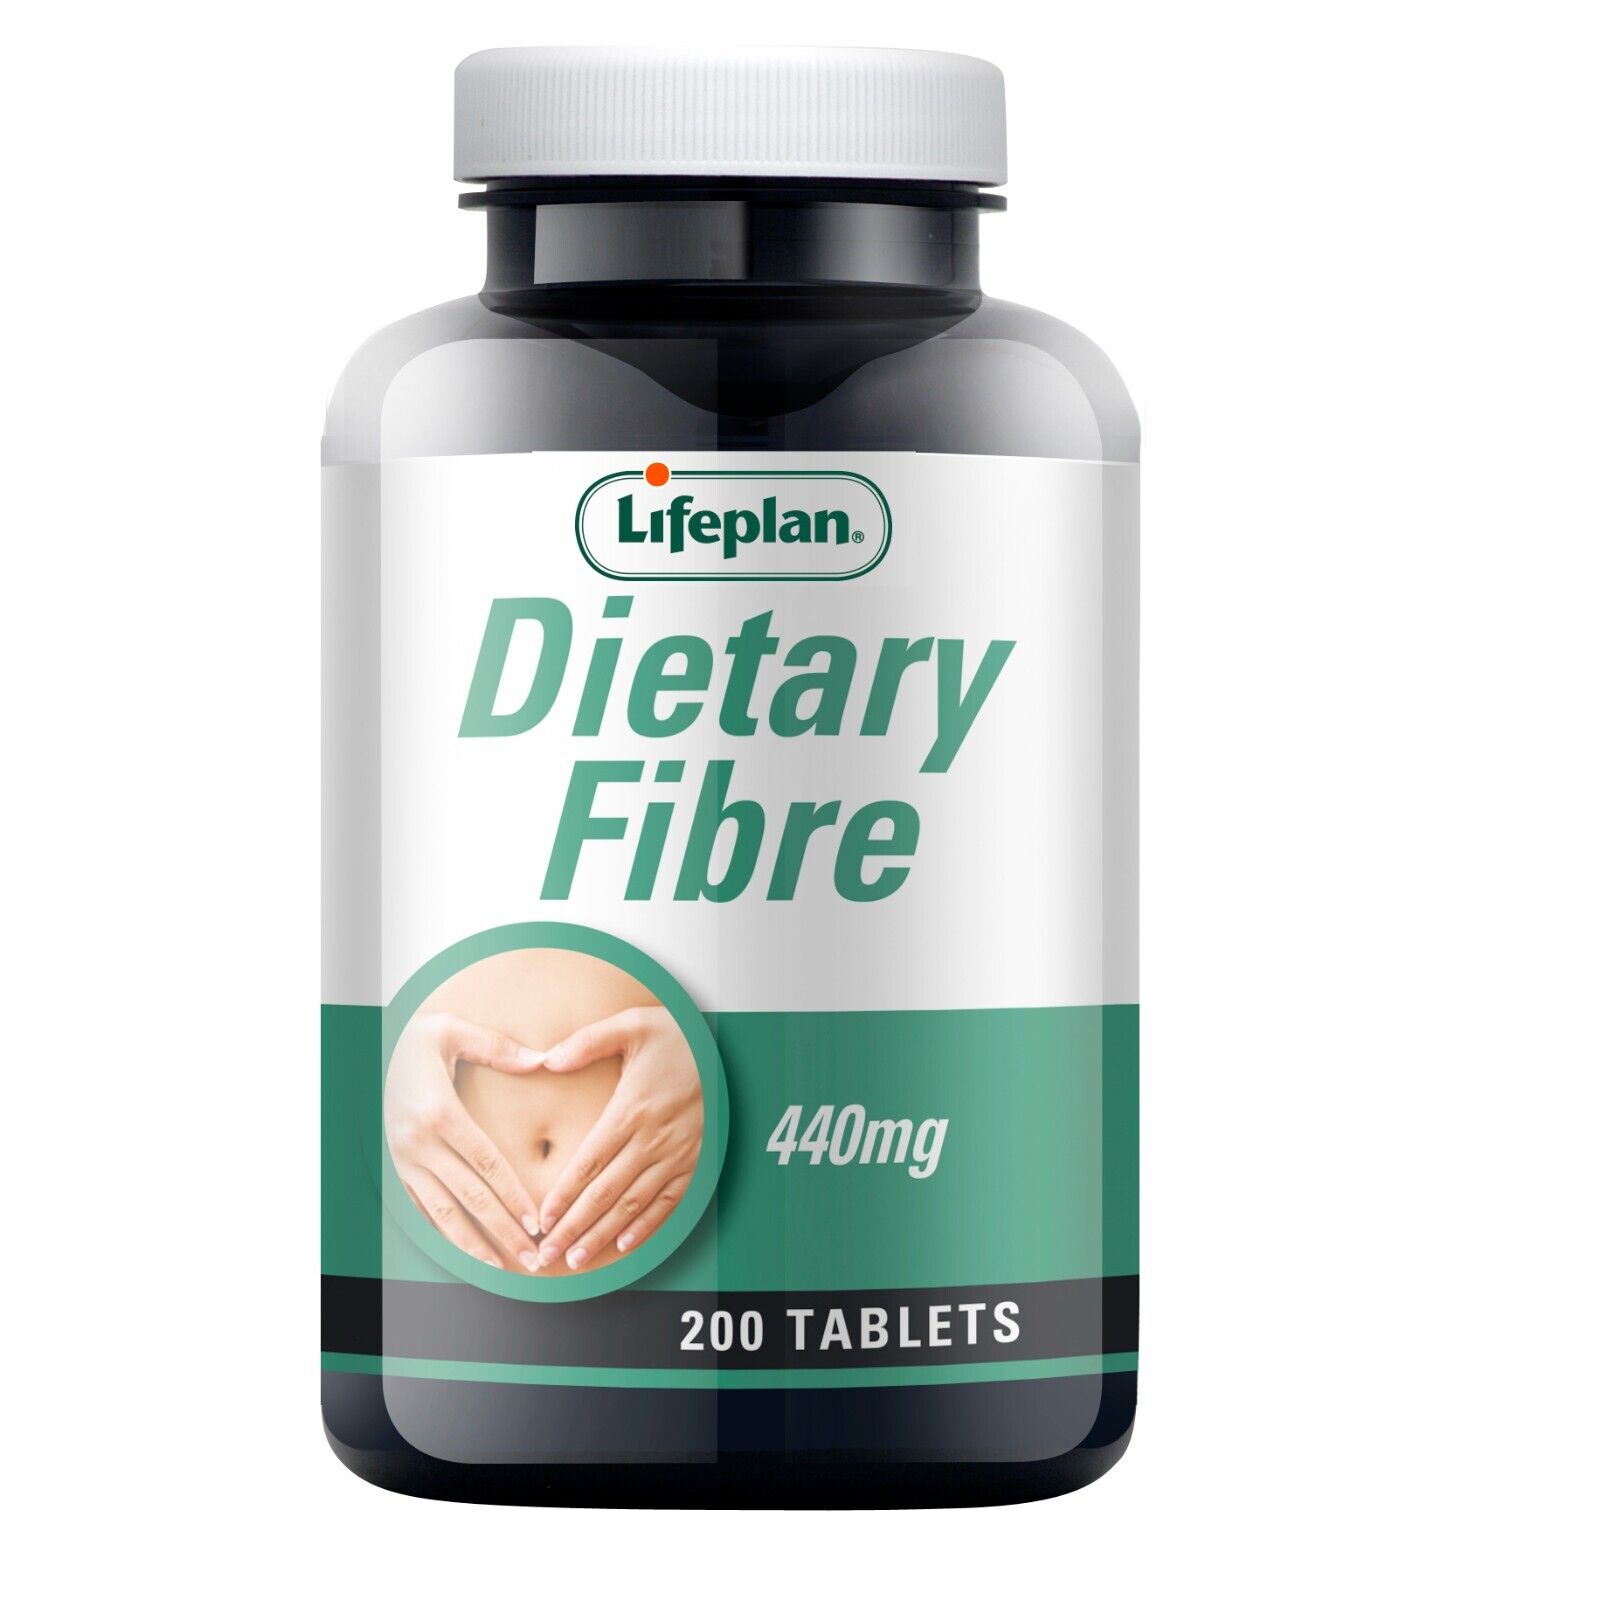 Lifeplan Dietary Fibre 440mg 200 Tablets